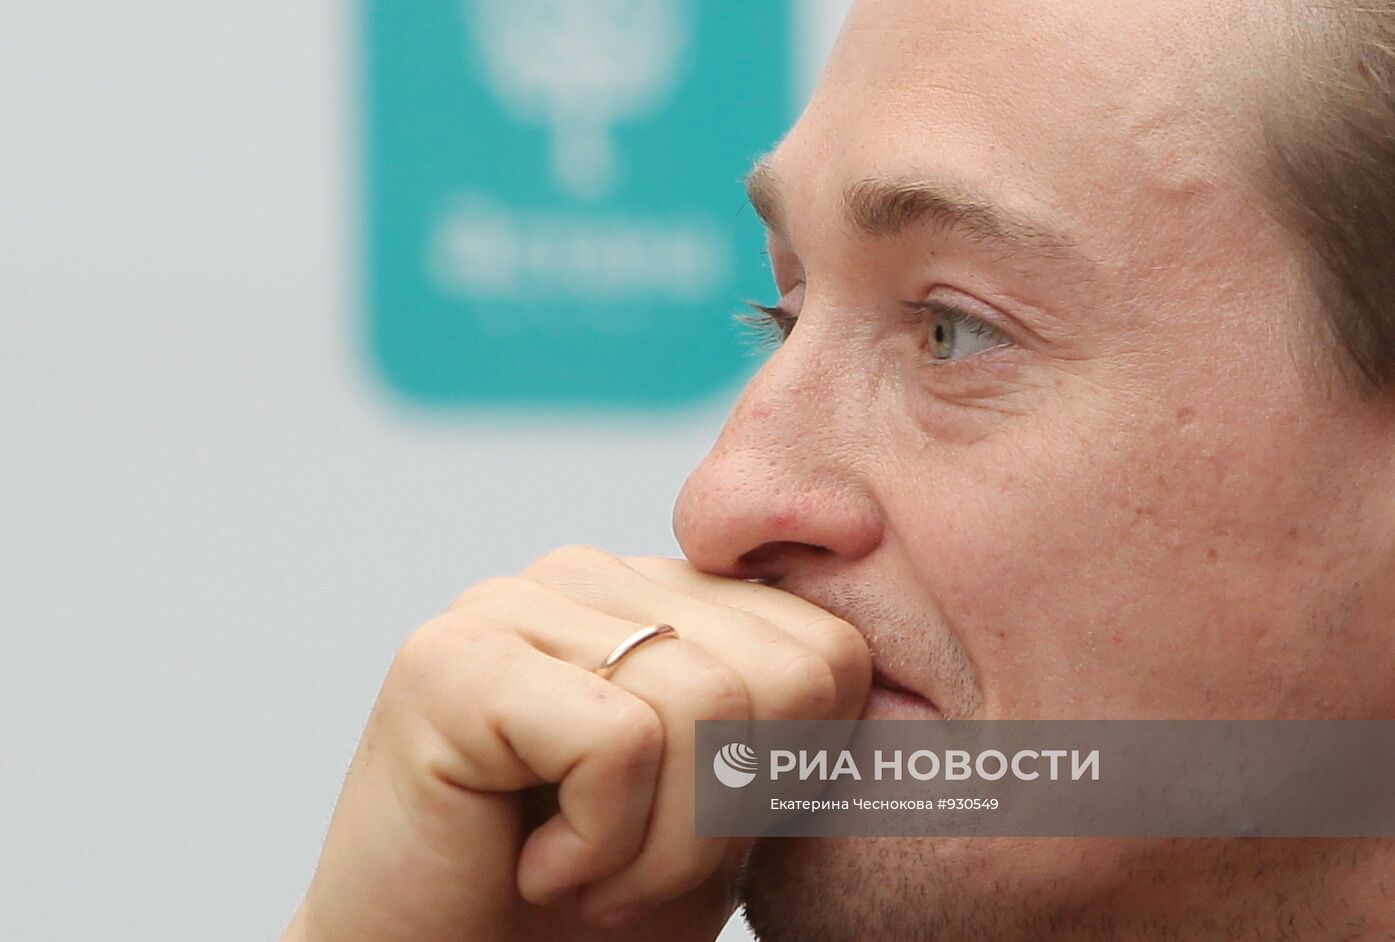 Пресс-конференция Сергея Безрукова в Астане